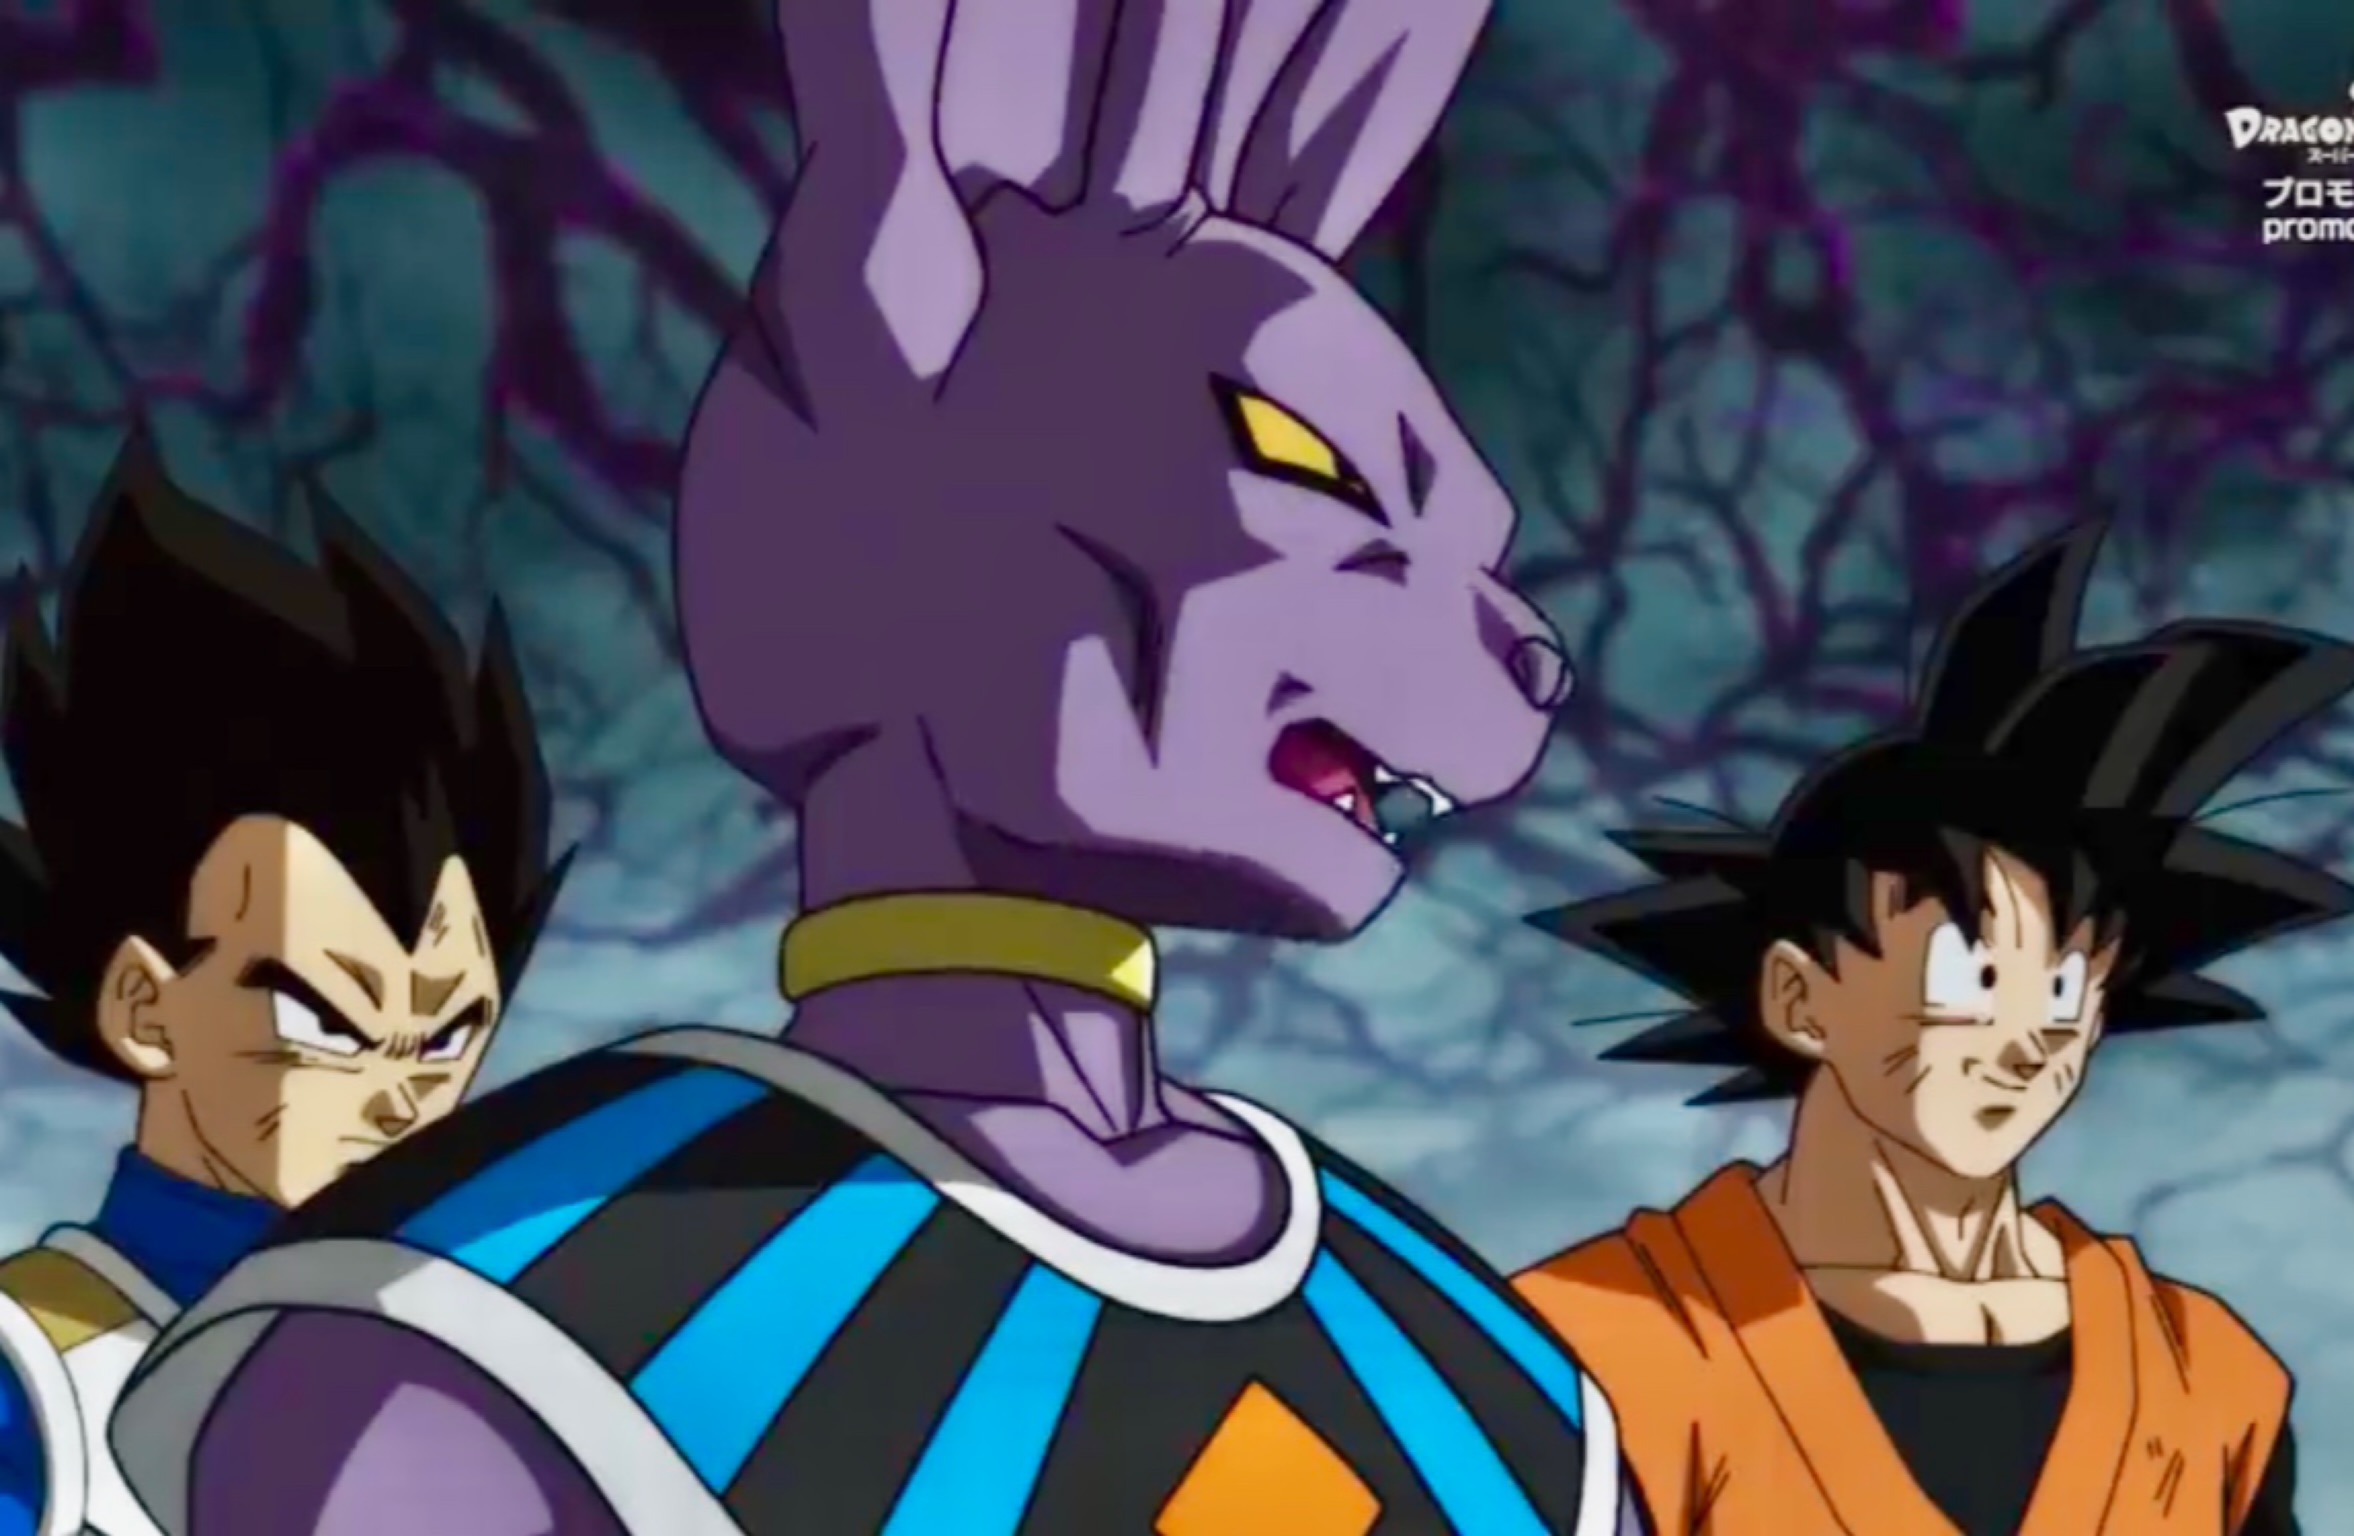 Beerus Goku and Vegeta look onward in a dark forest